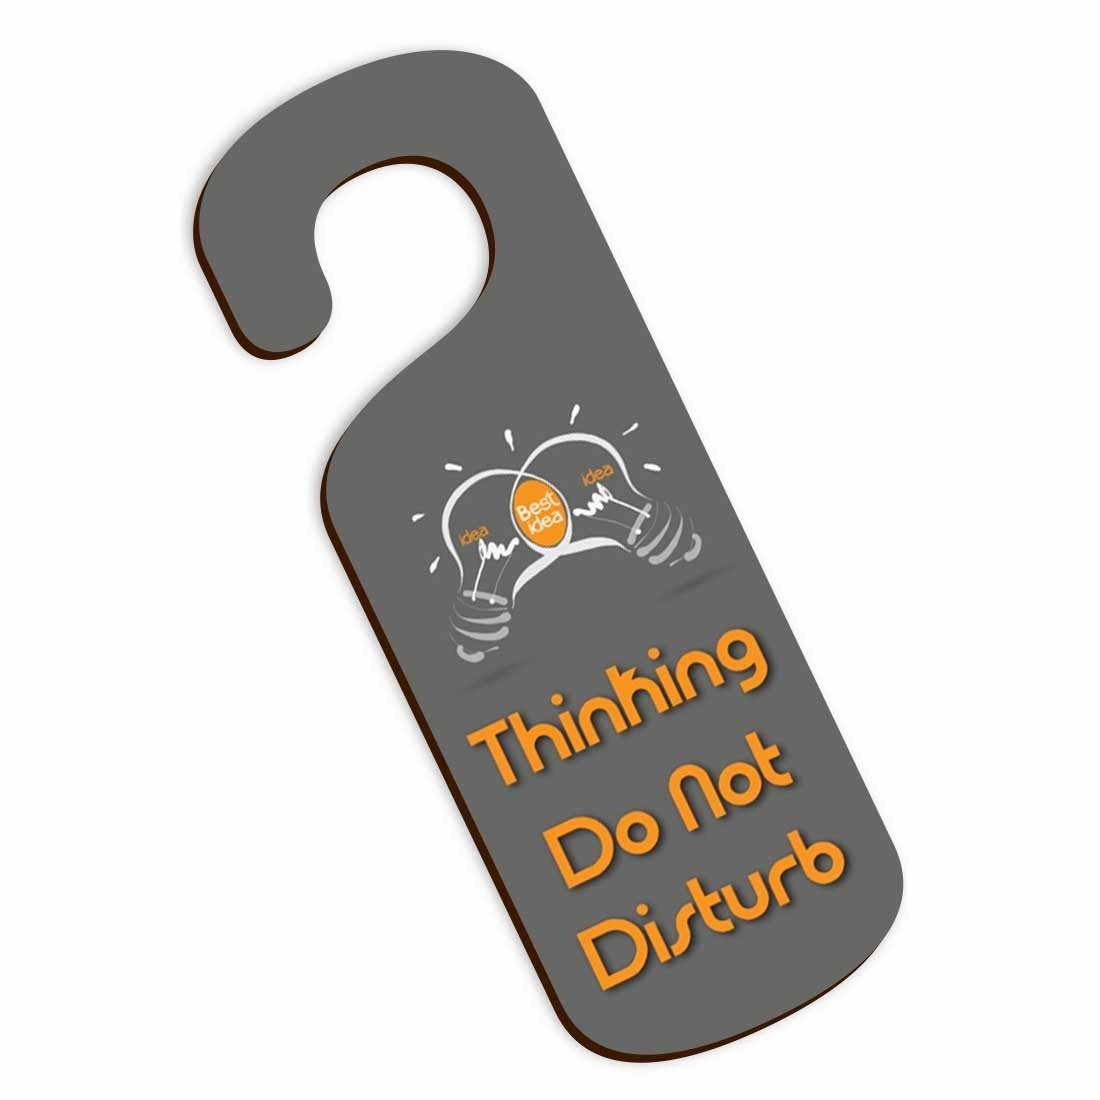 A door knob sign that says &quot;Thinking. Do not disturb&quot;